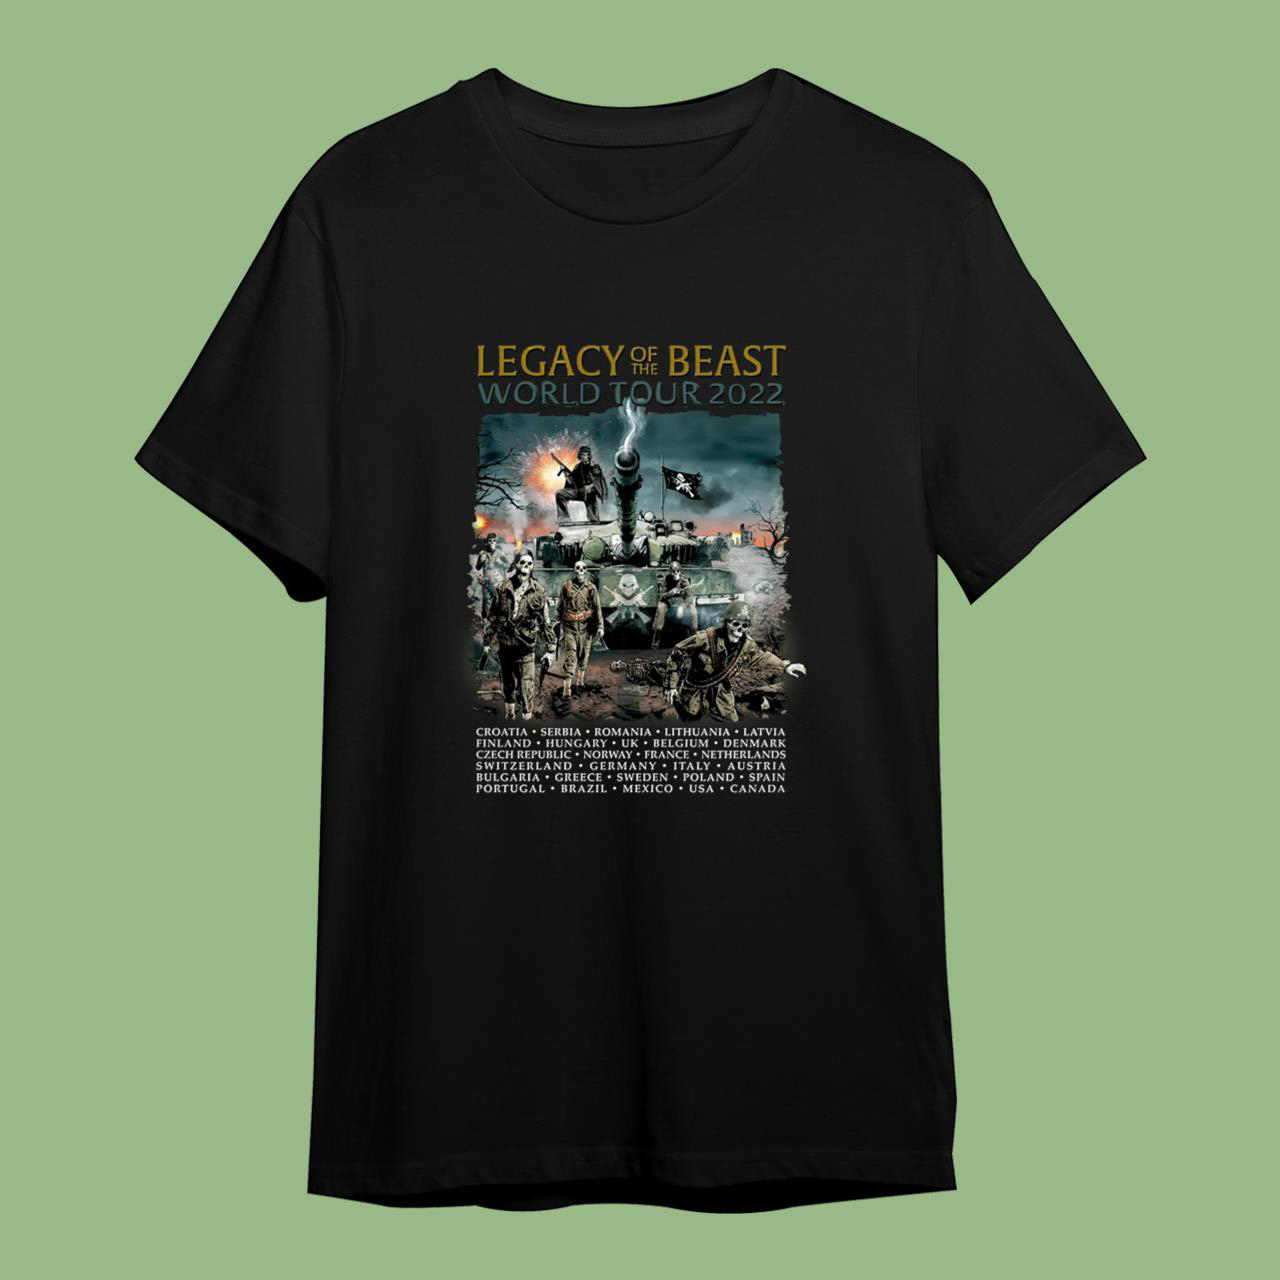 Iron Maiden Aces High 2022 Tour T-Shirt